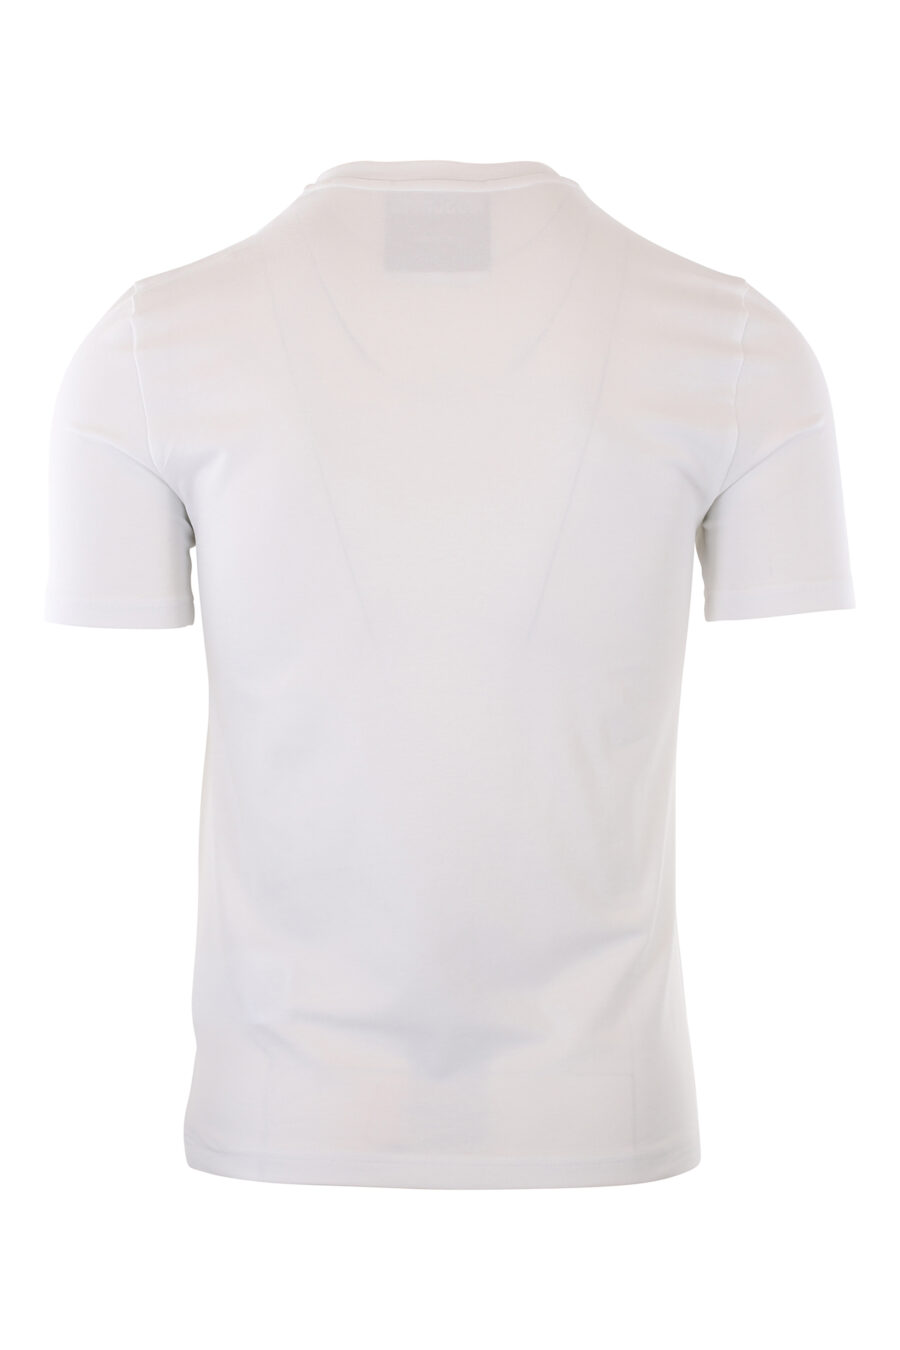 T-shirt blanc avec double logo "smiley" - IMG 2428